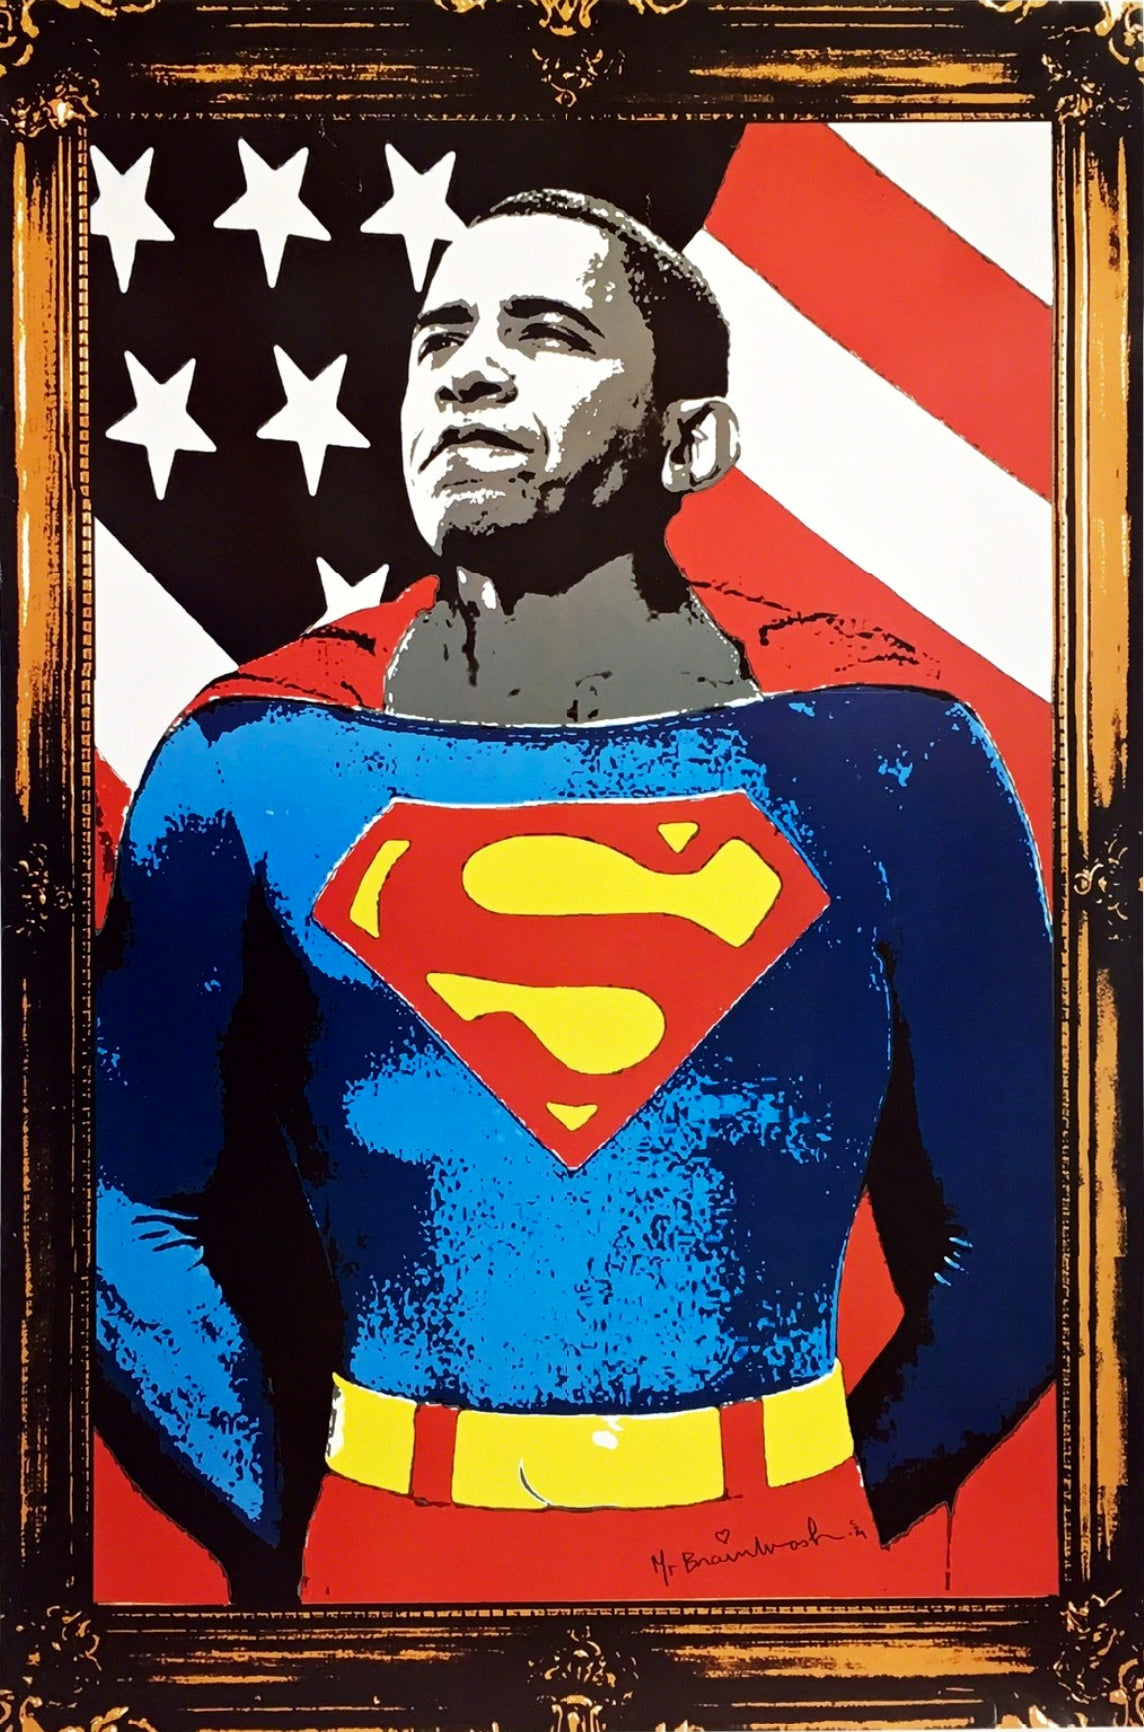 Mr. Brainwash "Obama Superman"